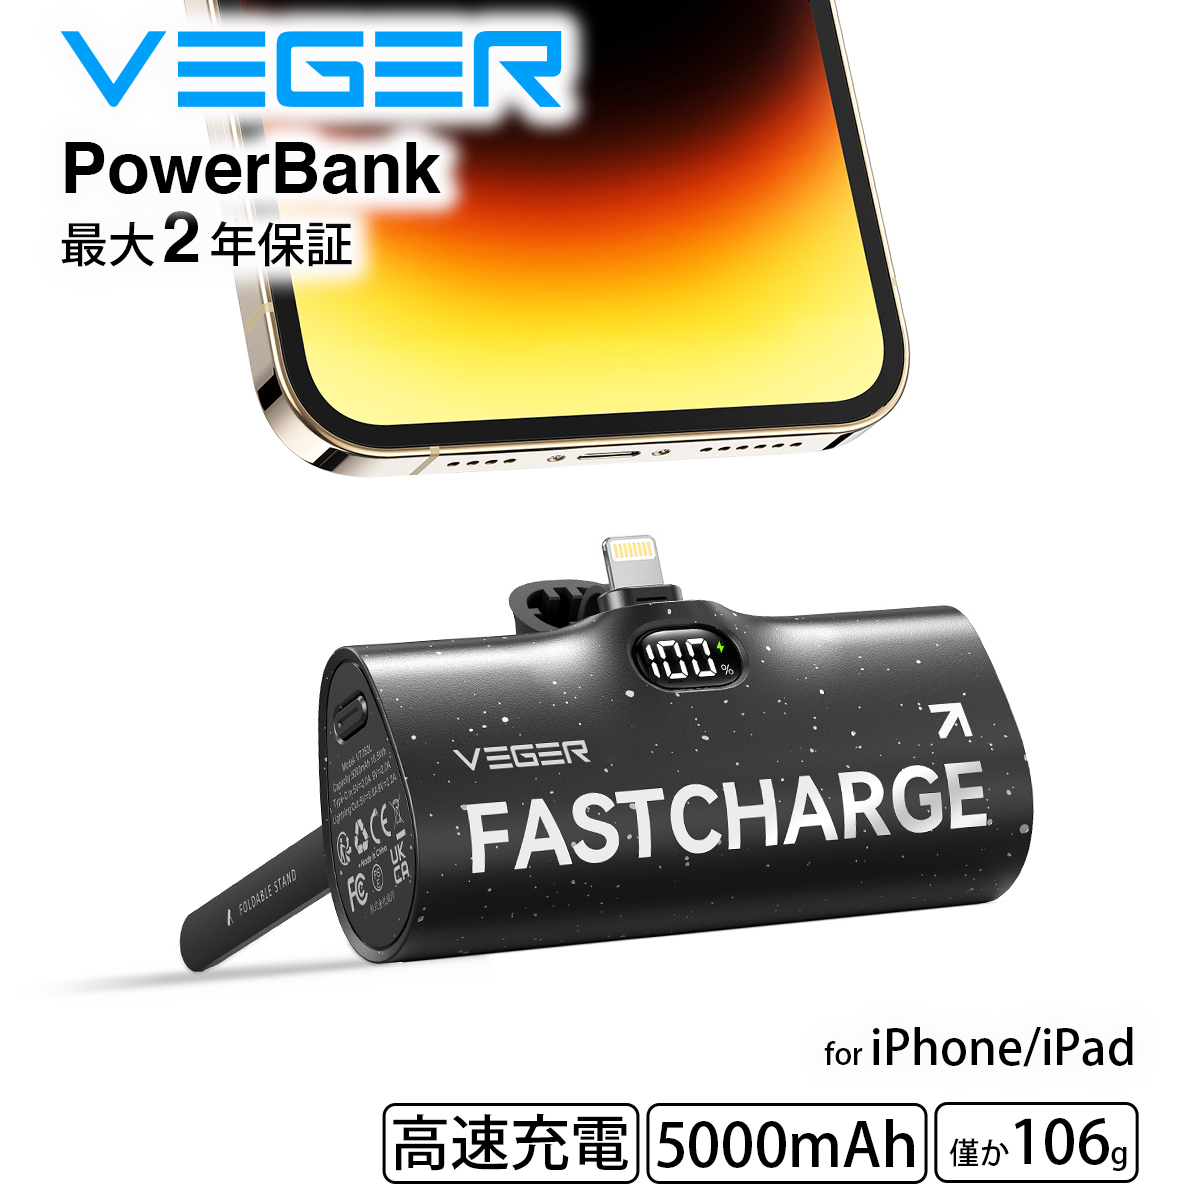 VEGER PowerBank FASTCHARGE 5000mAh Lightning (モバイルバッテリー 大容量 5000mAh) ブラック ホワイト 超軽量 105g  iPhone AirPods Galaxy Android スマートフォン Switch スイッチ おりたたみスタンド付き